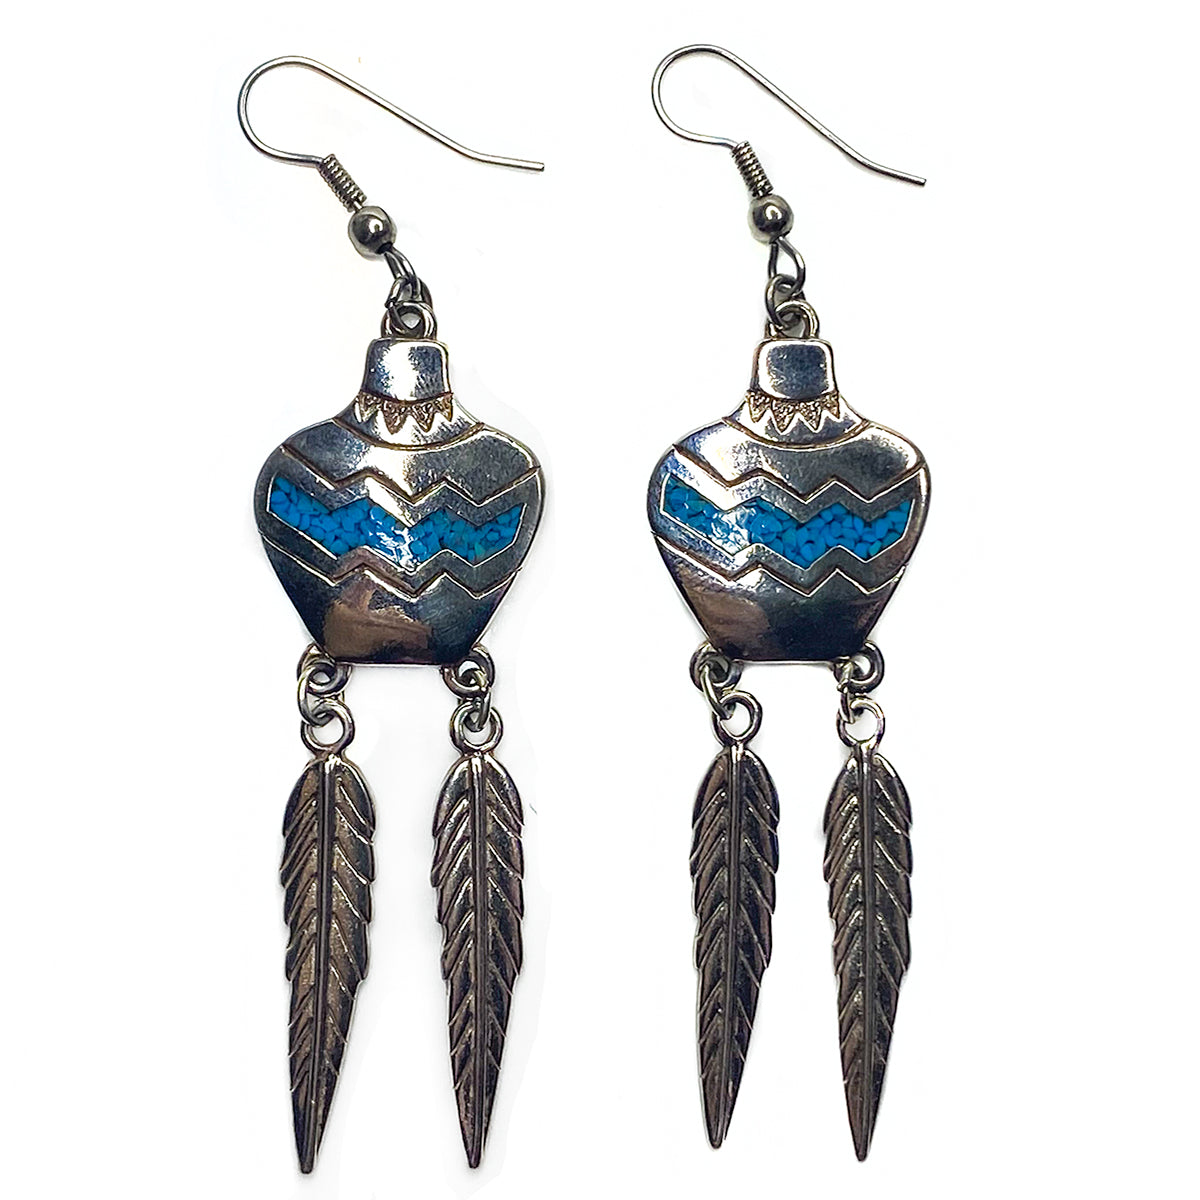 Native American Inspired Earrings